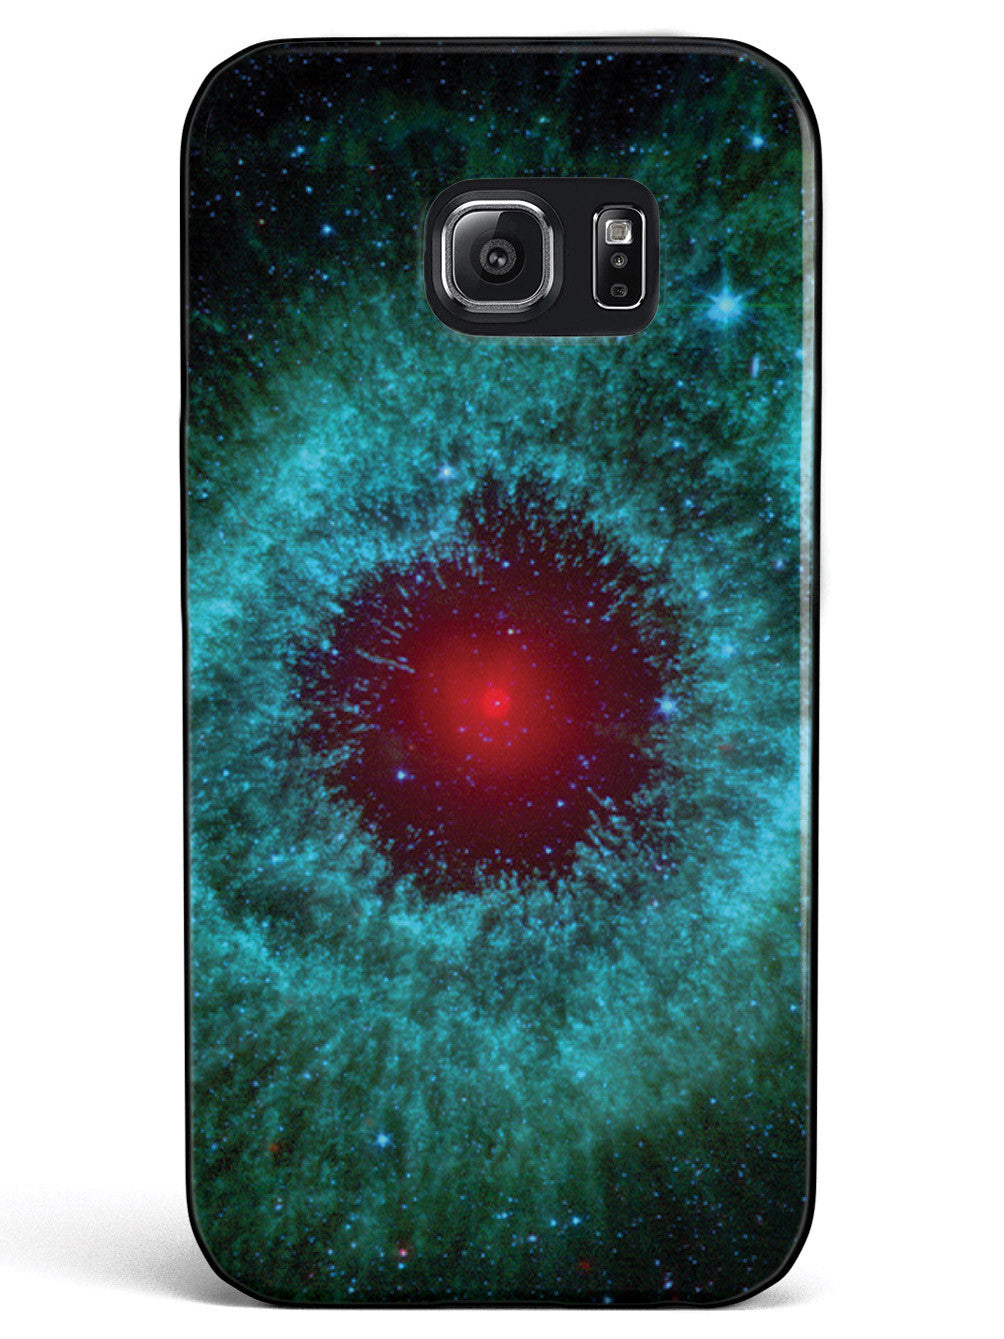 Helix Nebula Outer Space Planetary Eye of God Case